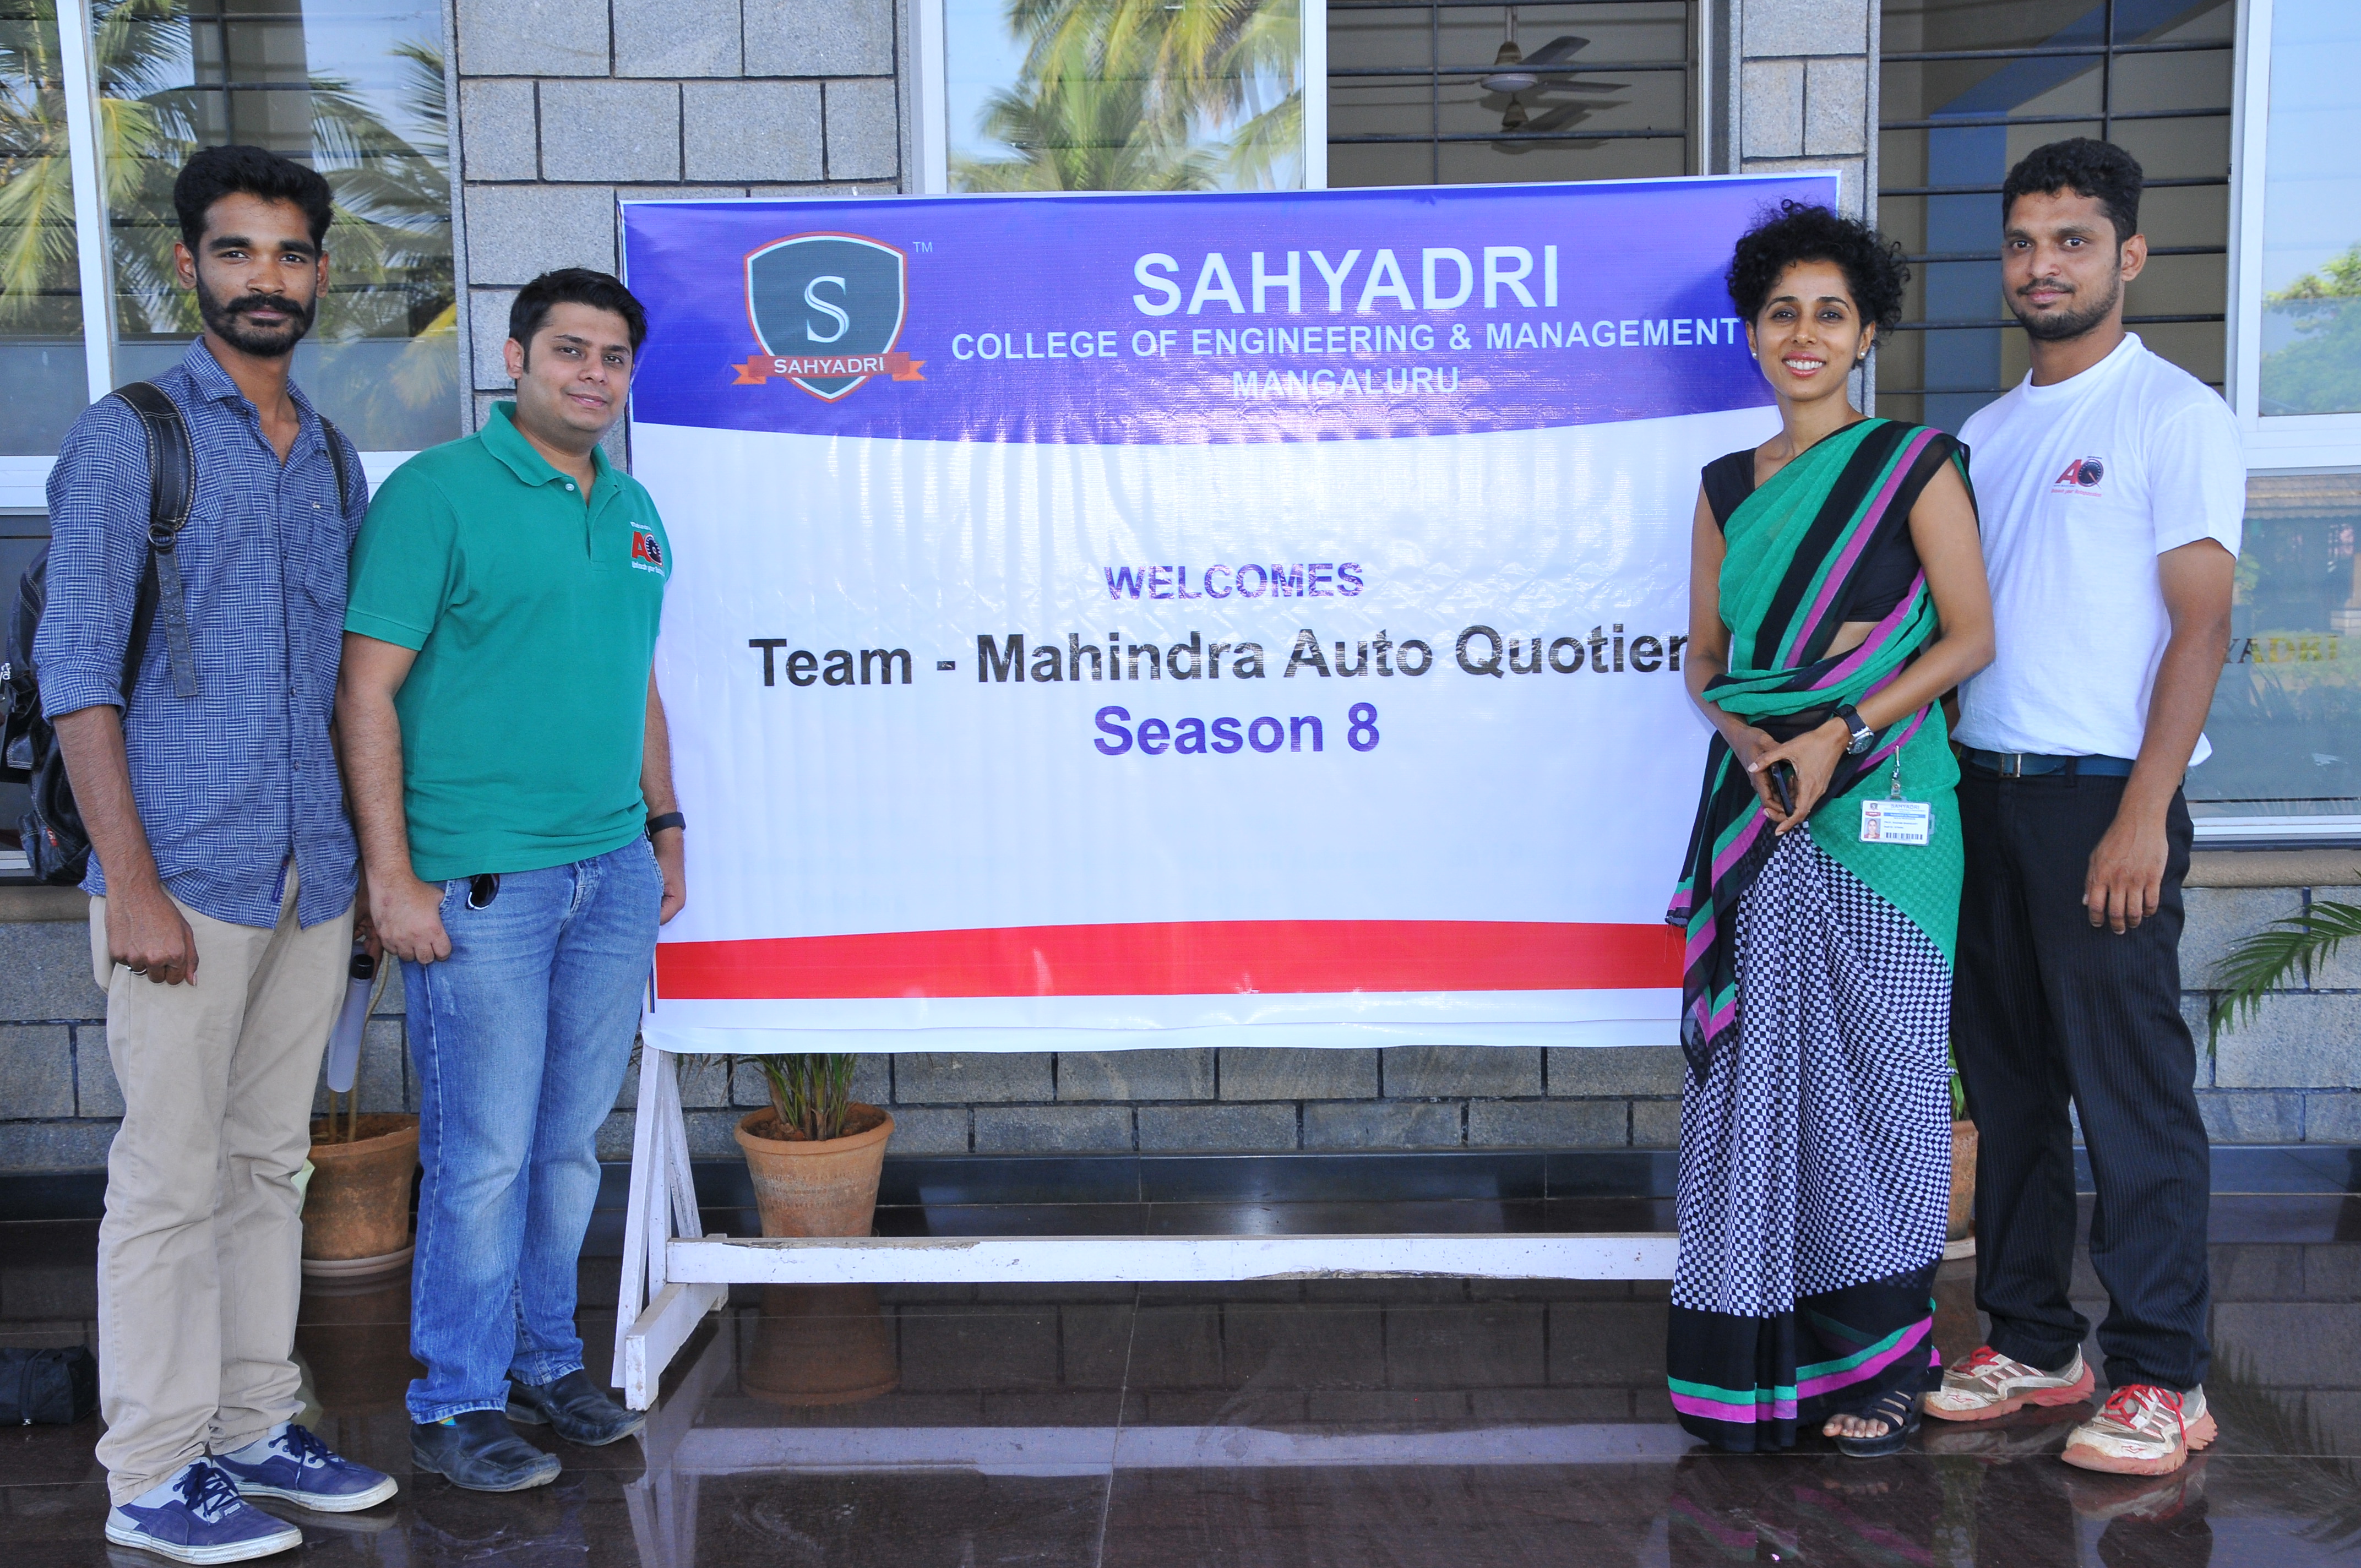 Mahindra Auto Quotient Season 8 conducted at Sahyadri 